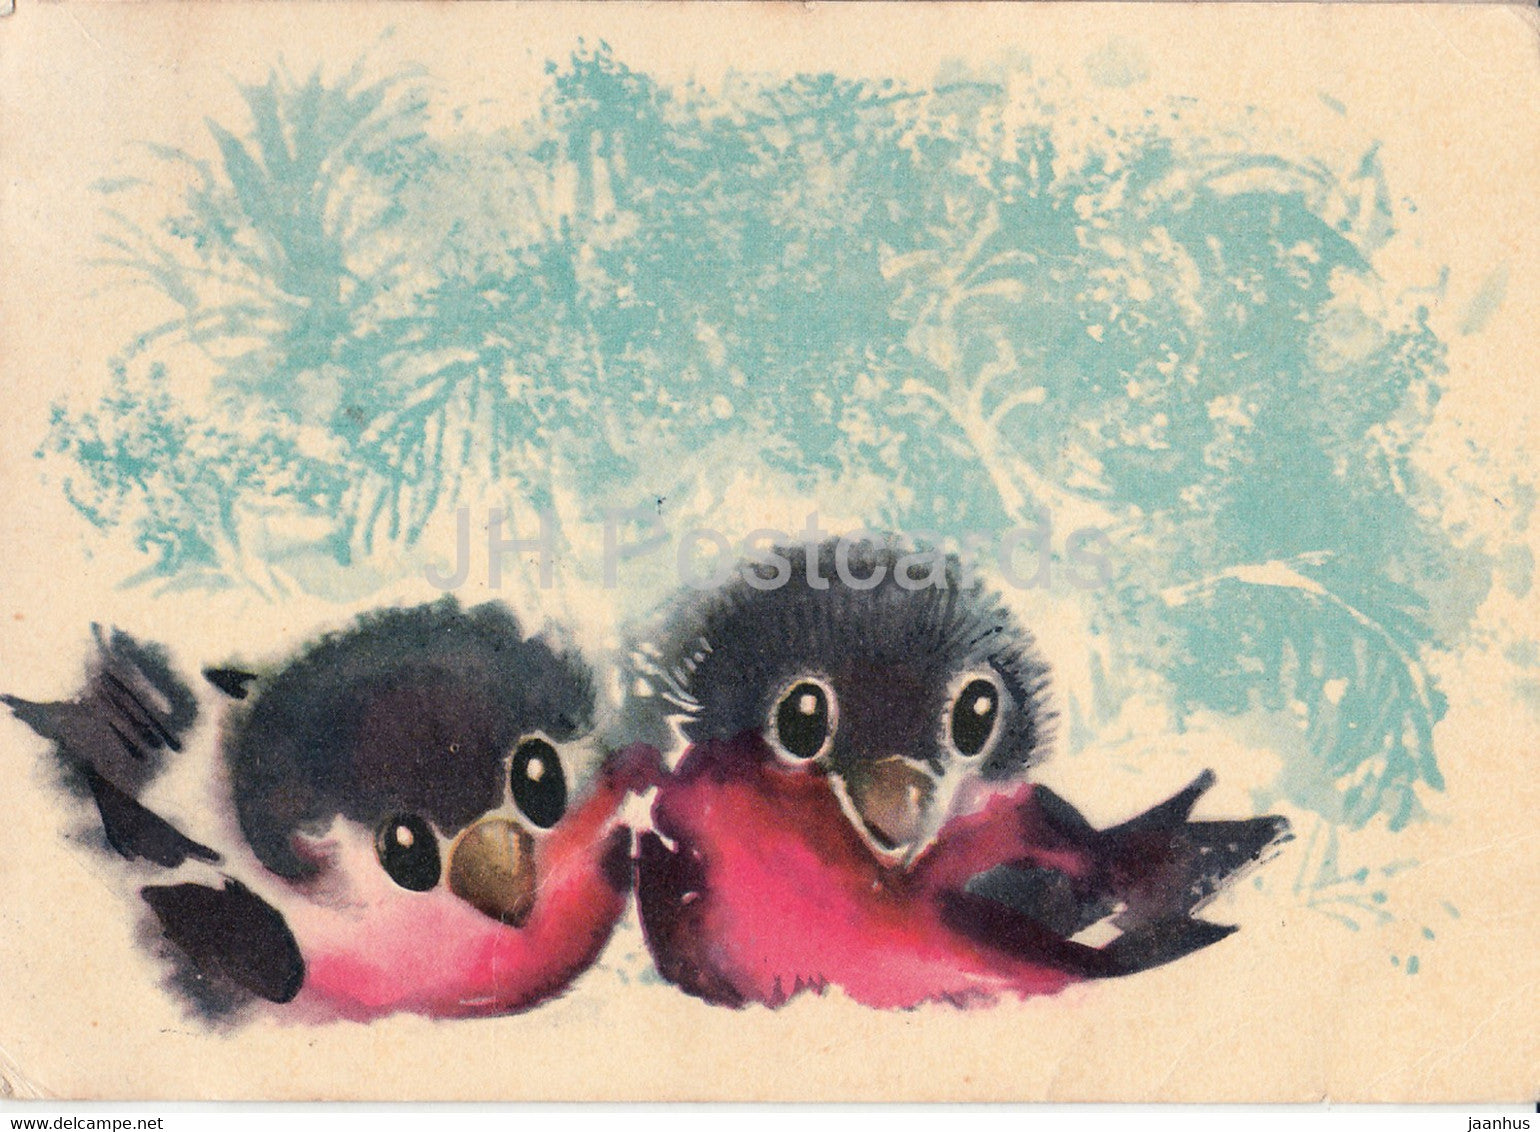 New Year Greeting card by E. Pikk - Bullfinch - birds - 1 - 1965 - Estonia USSR - used - JH Postcards